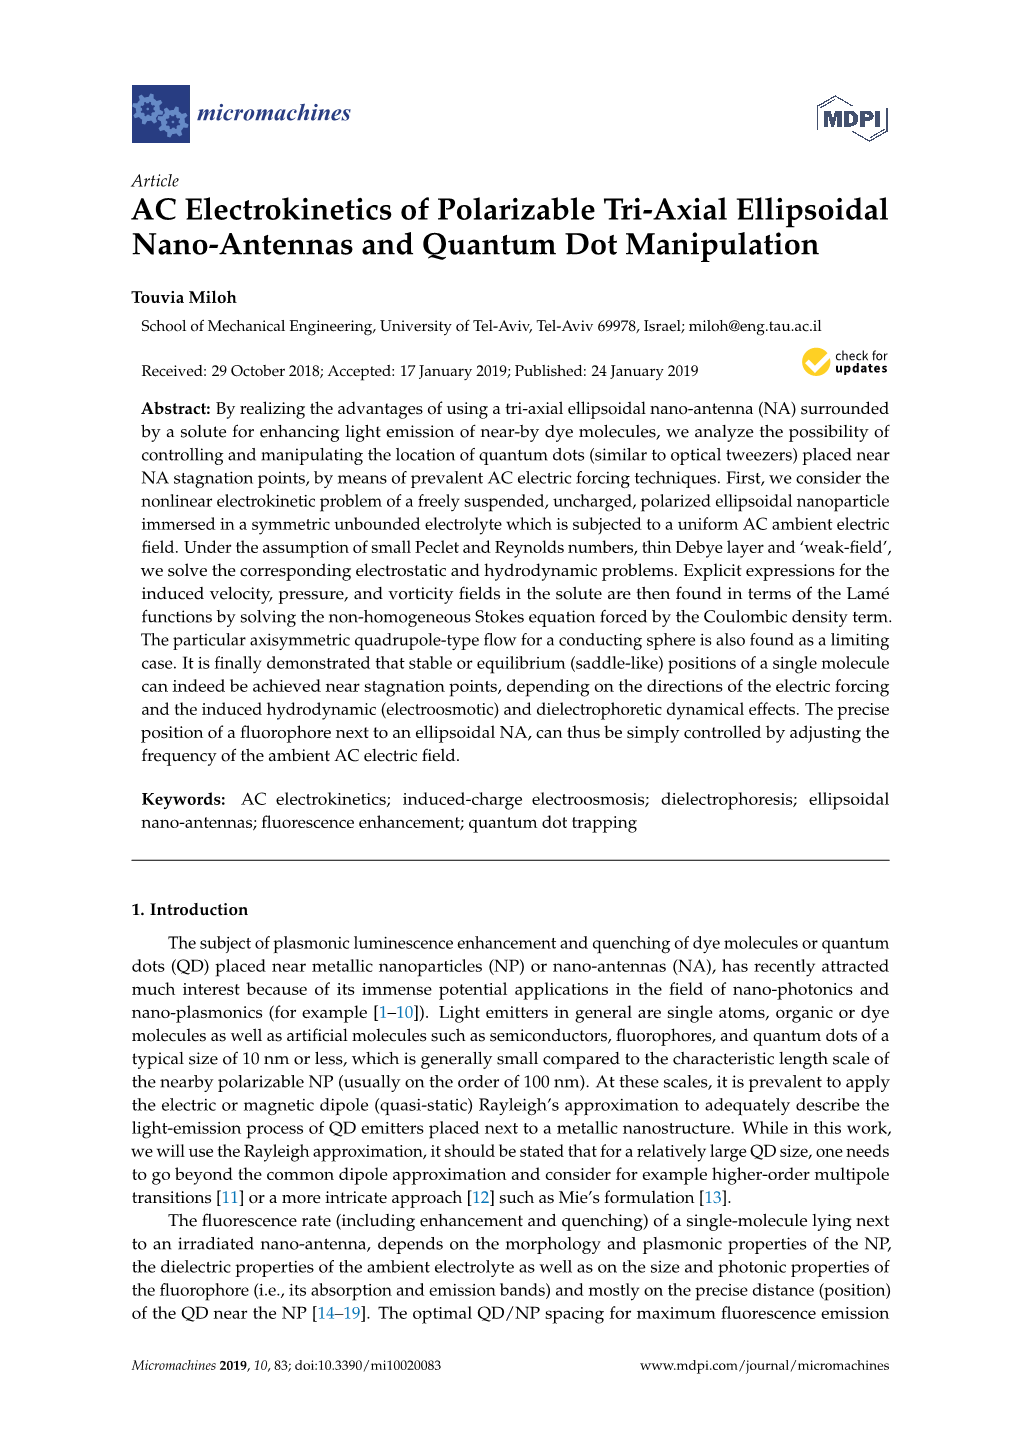 AC Electrokinetics of Polarizable Tri-Axial Ellipsoidal Nano-Antennas and Quantum Dot Manipulation